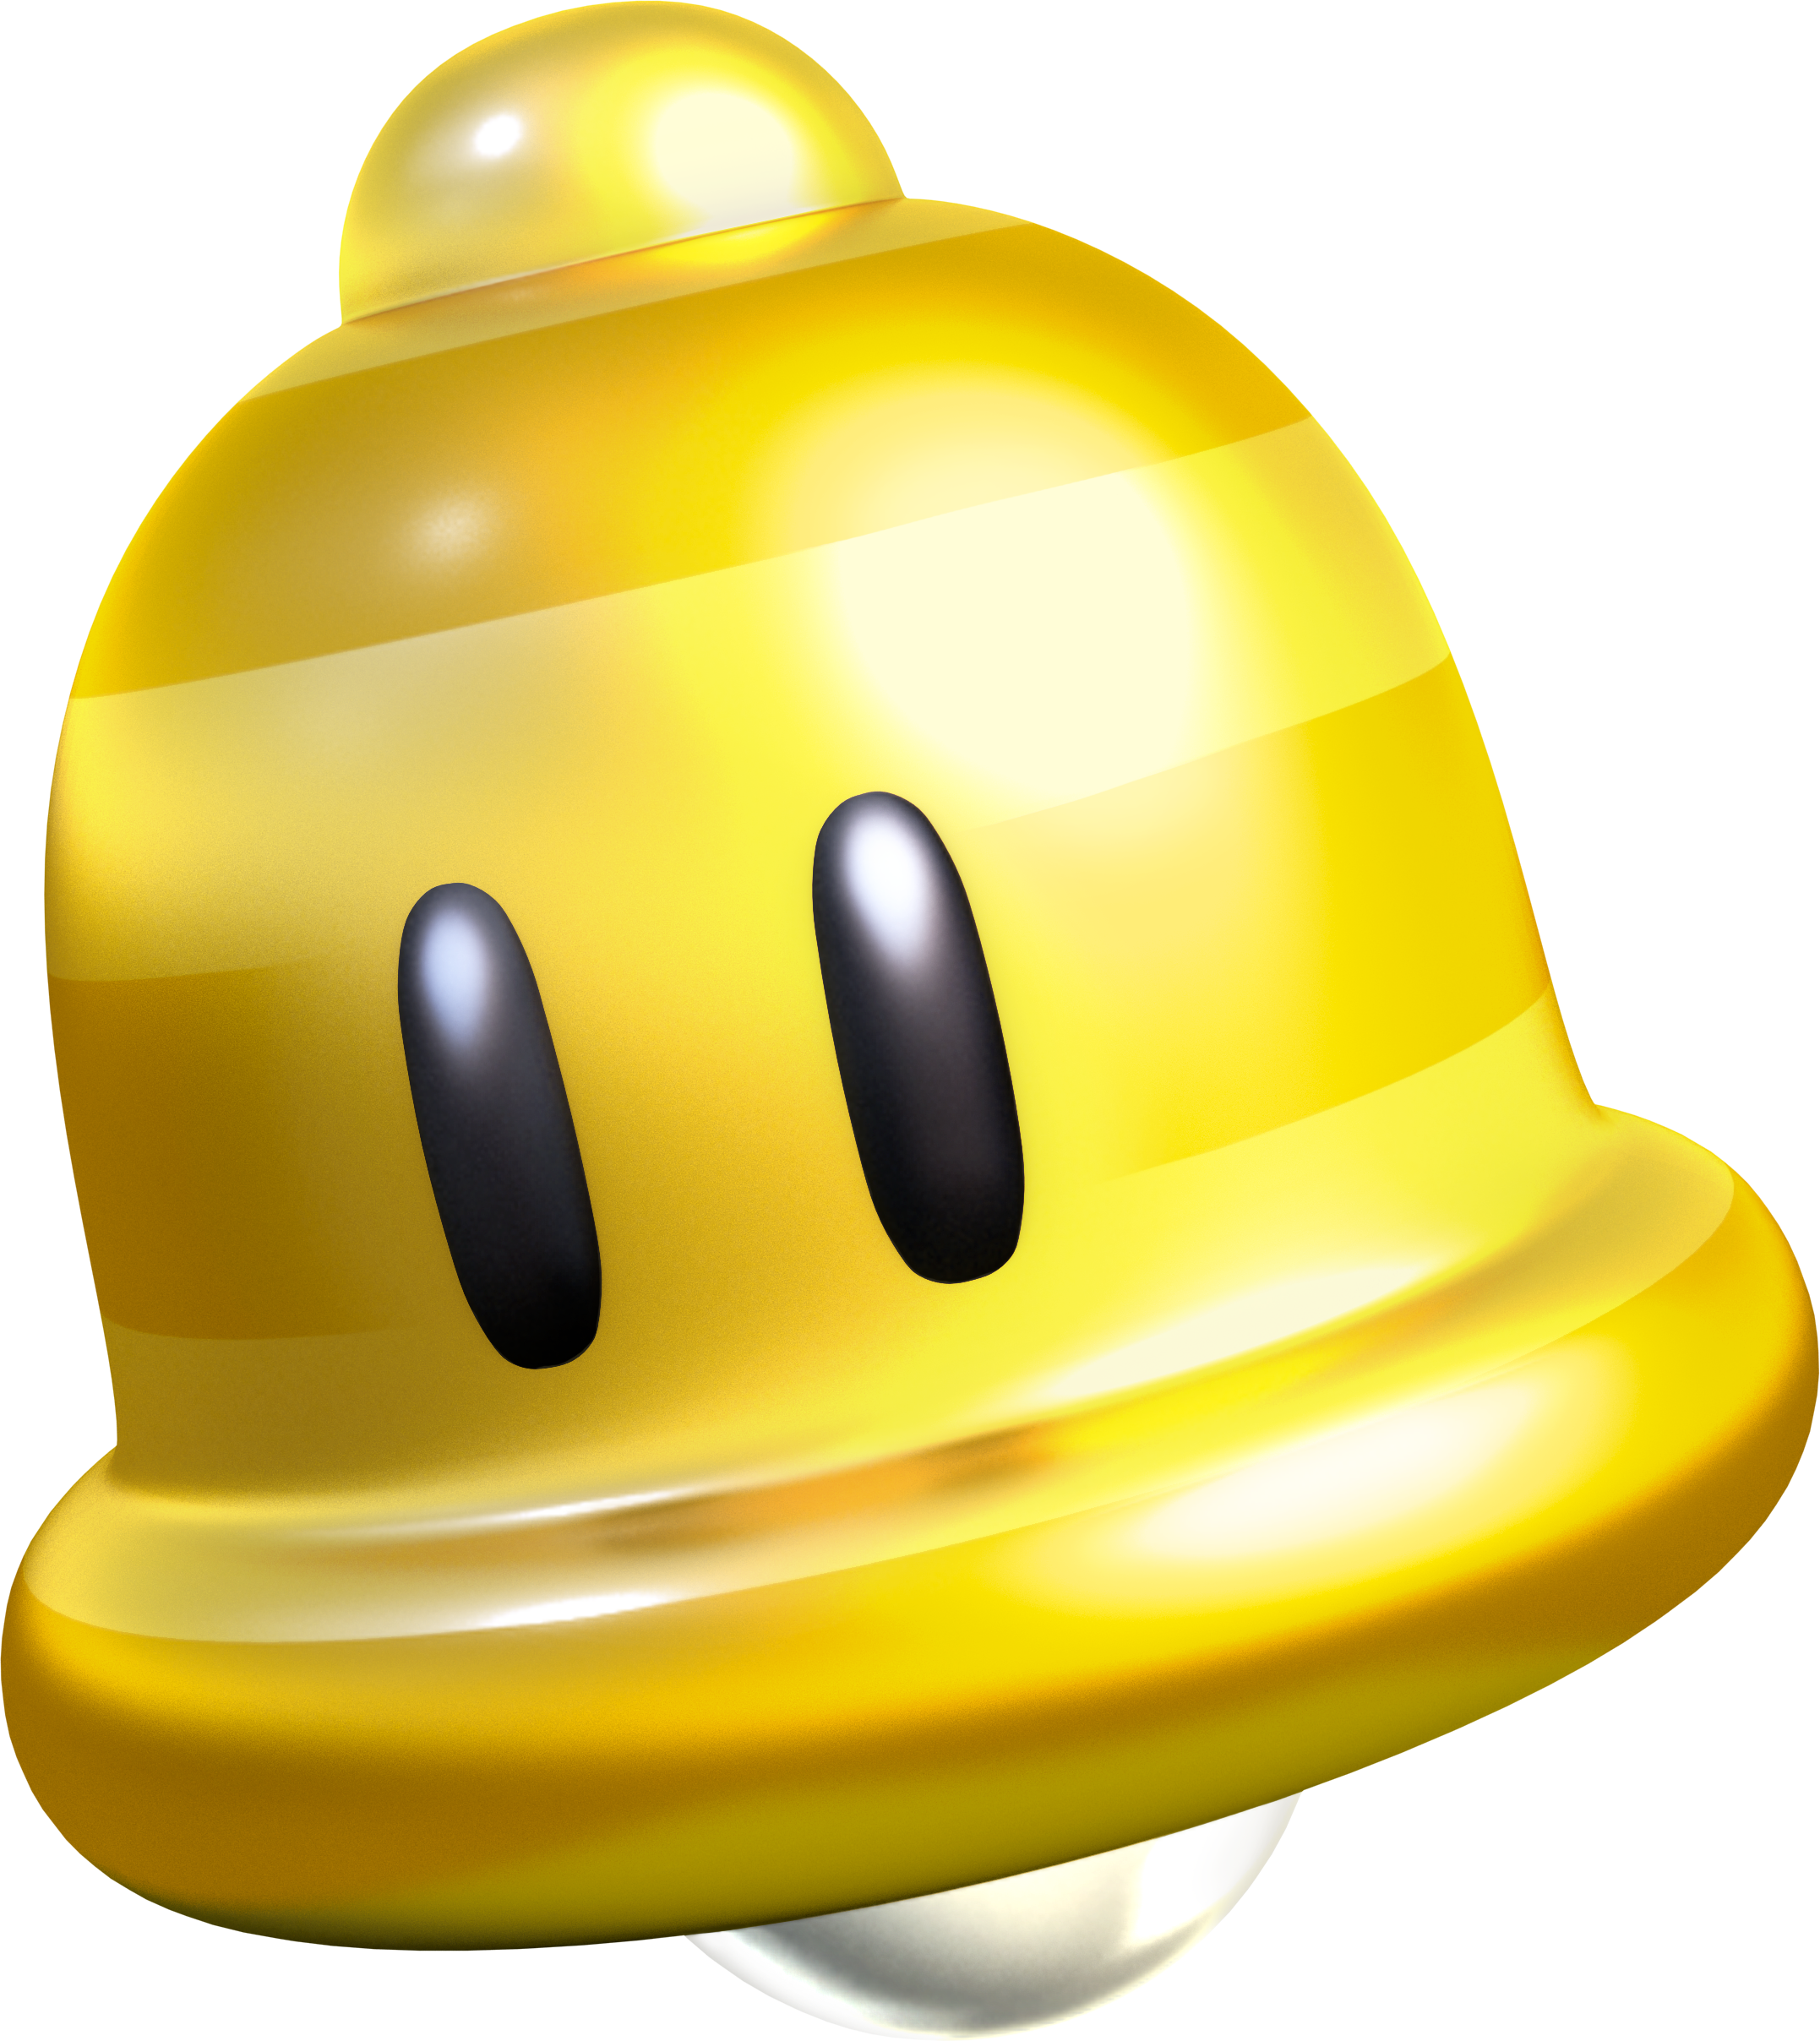 Super Bell - Mario Super Bell (2154x2416), Png Download